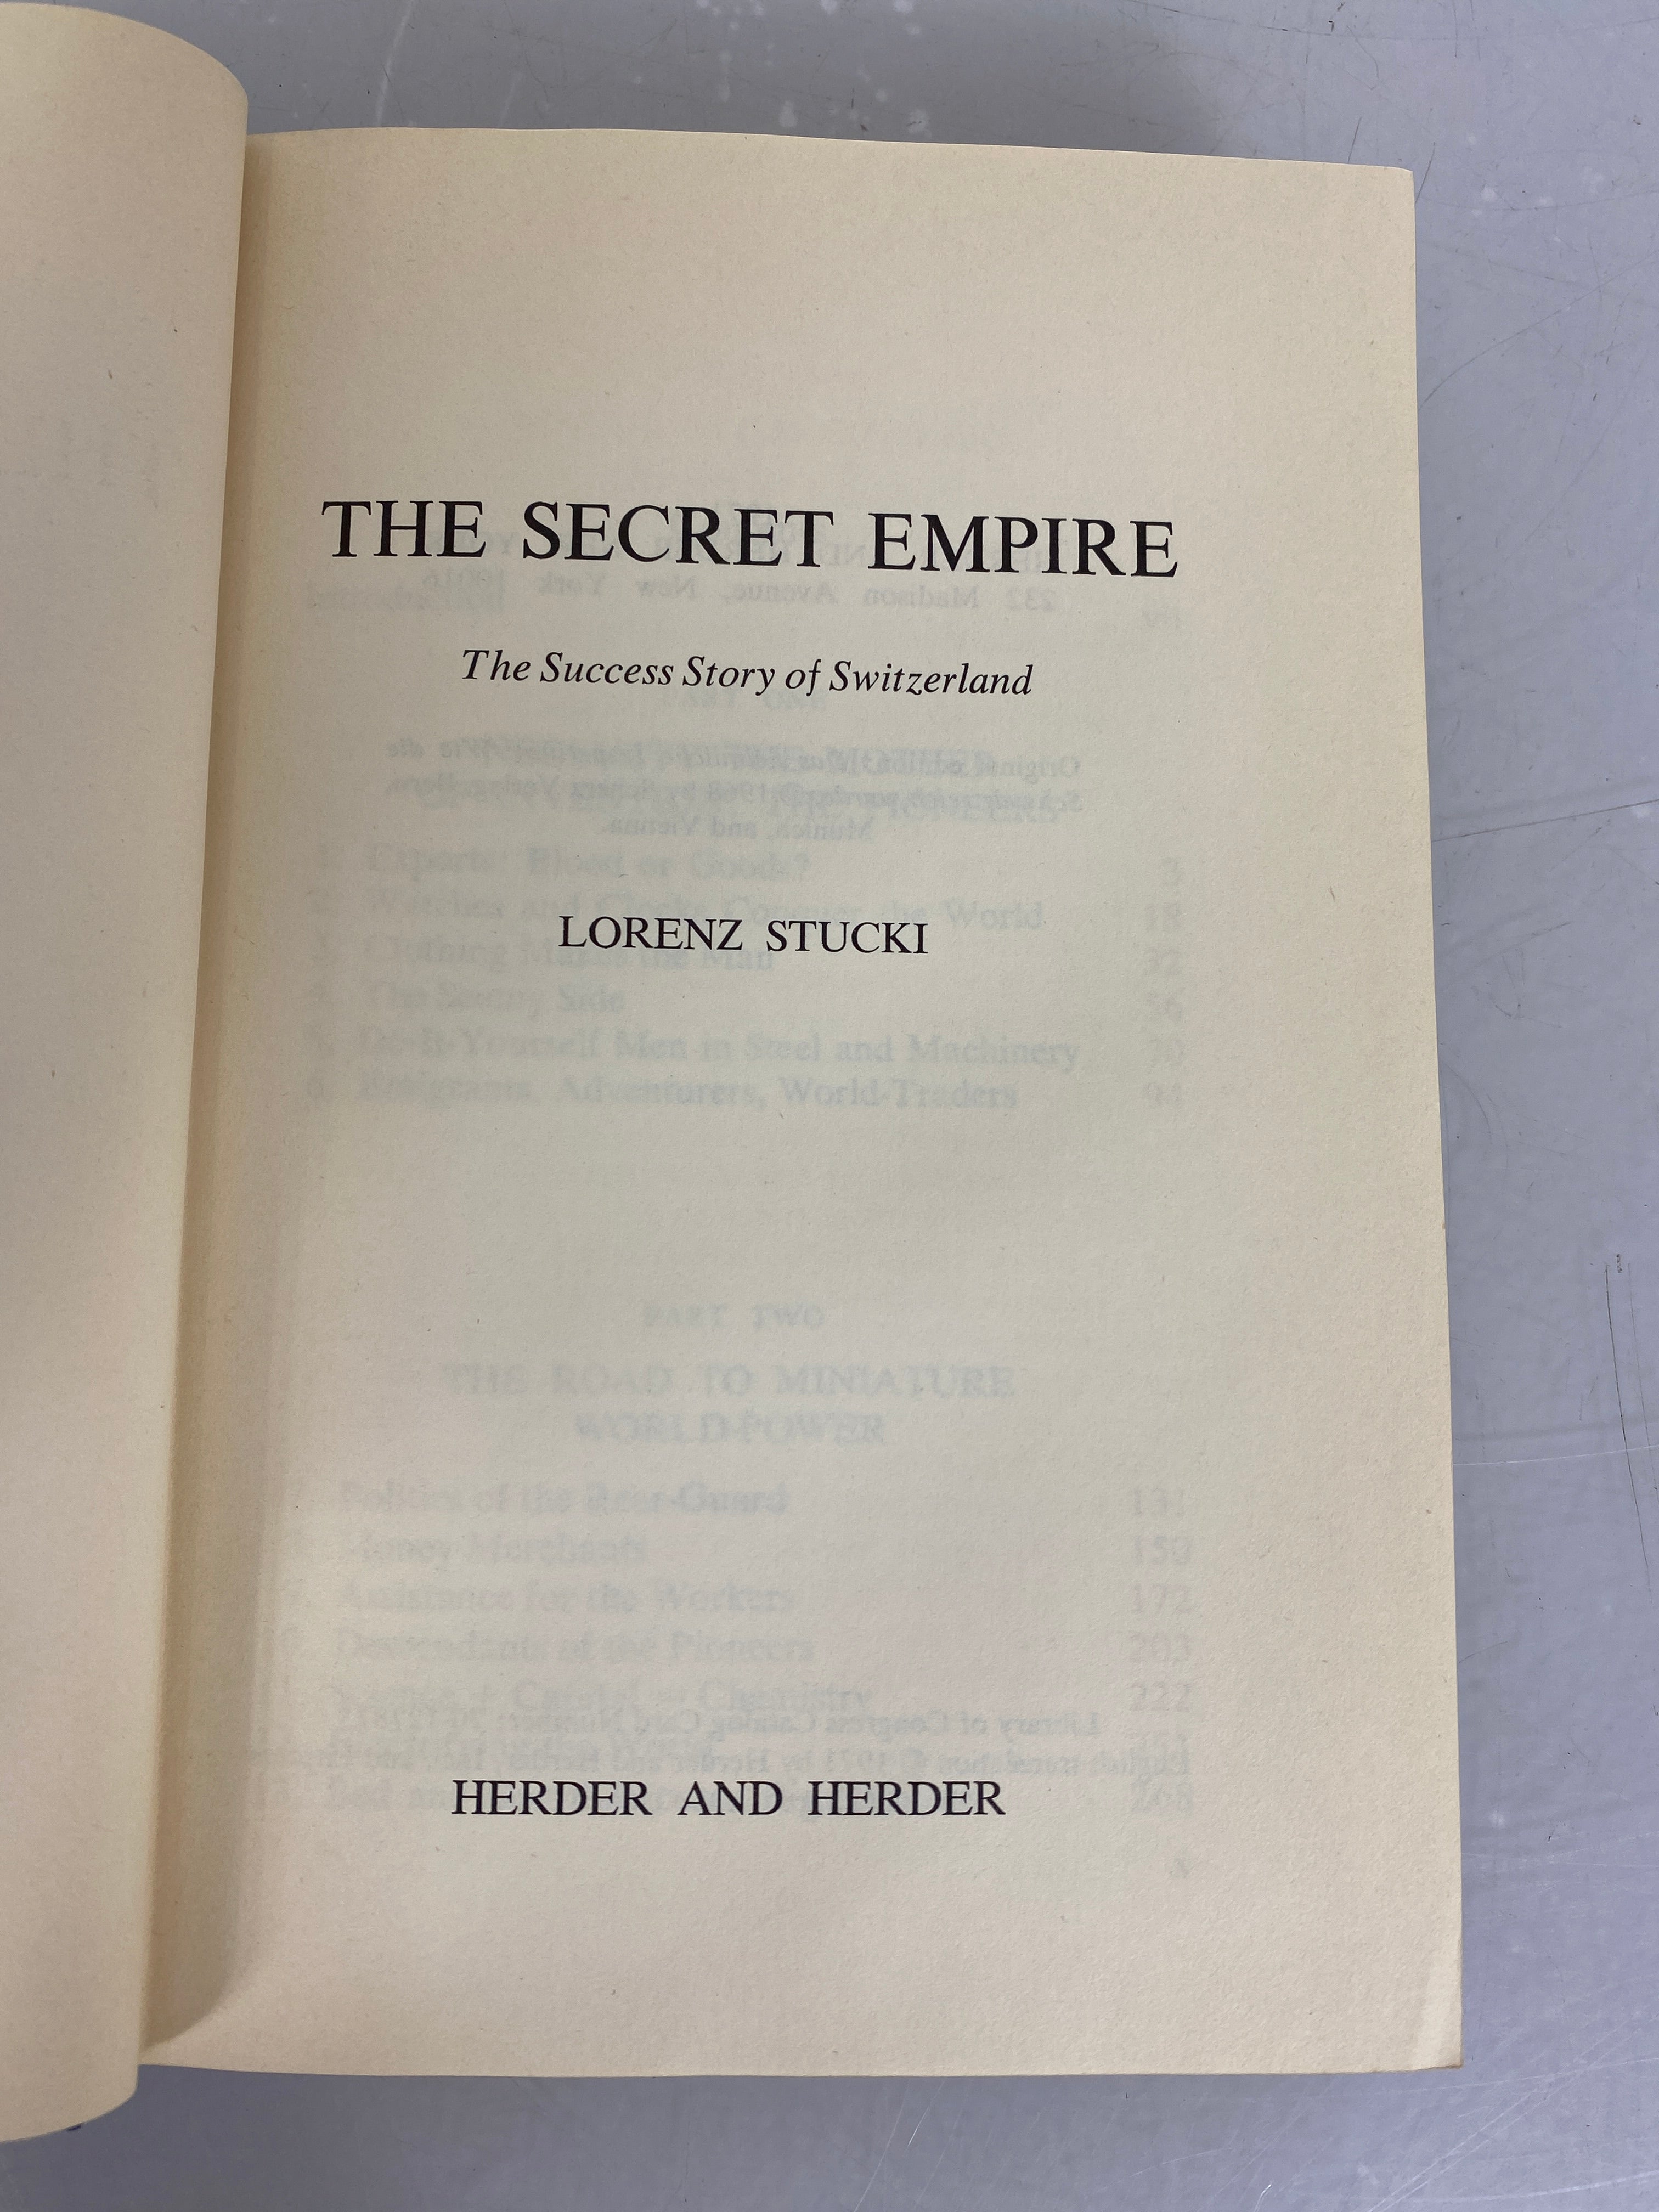 The Secret Empire the Success Story of Switzerland by Lorenz Stucki 1971 HC DJ